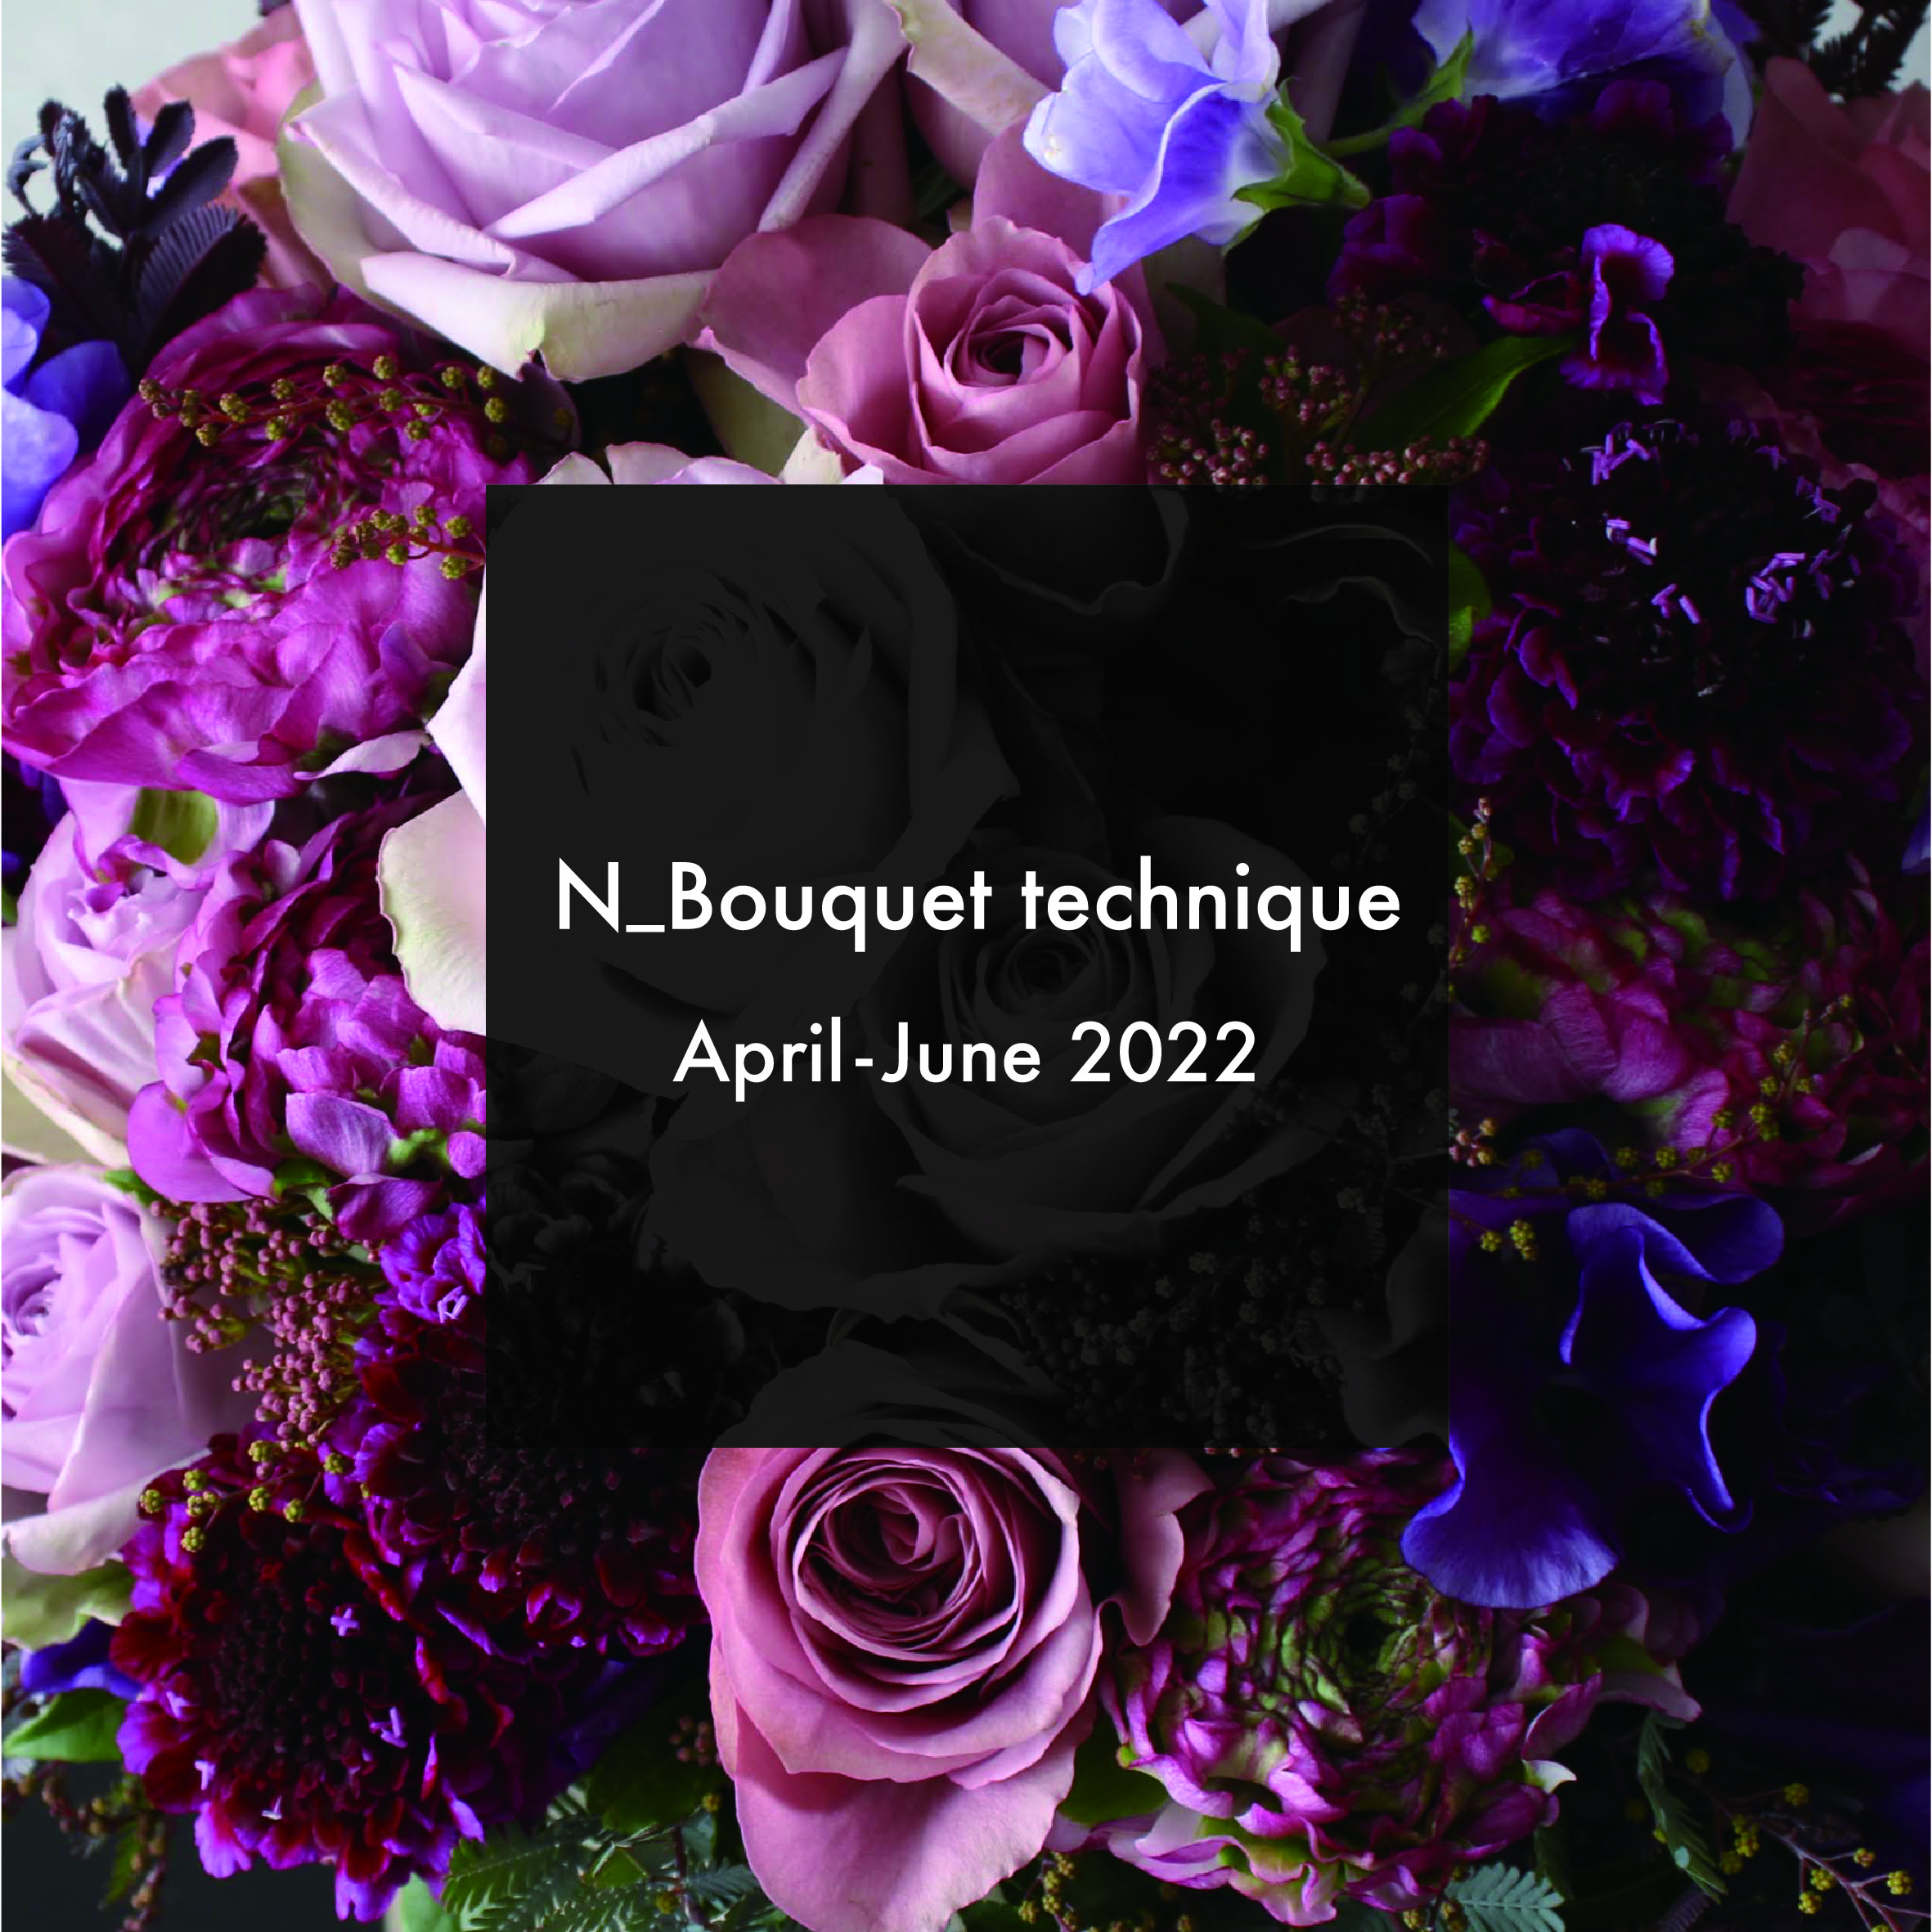  N_Bouquet technique 4月,5月,6月の参加者募集がスタートしました